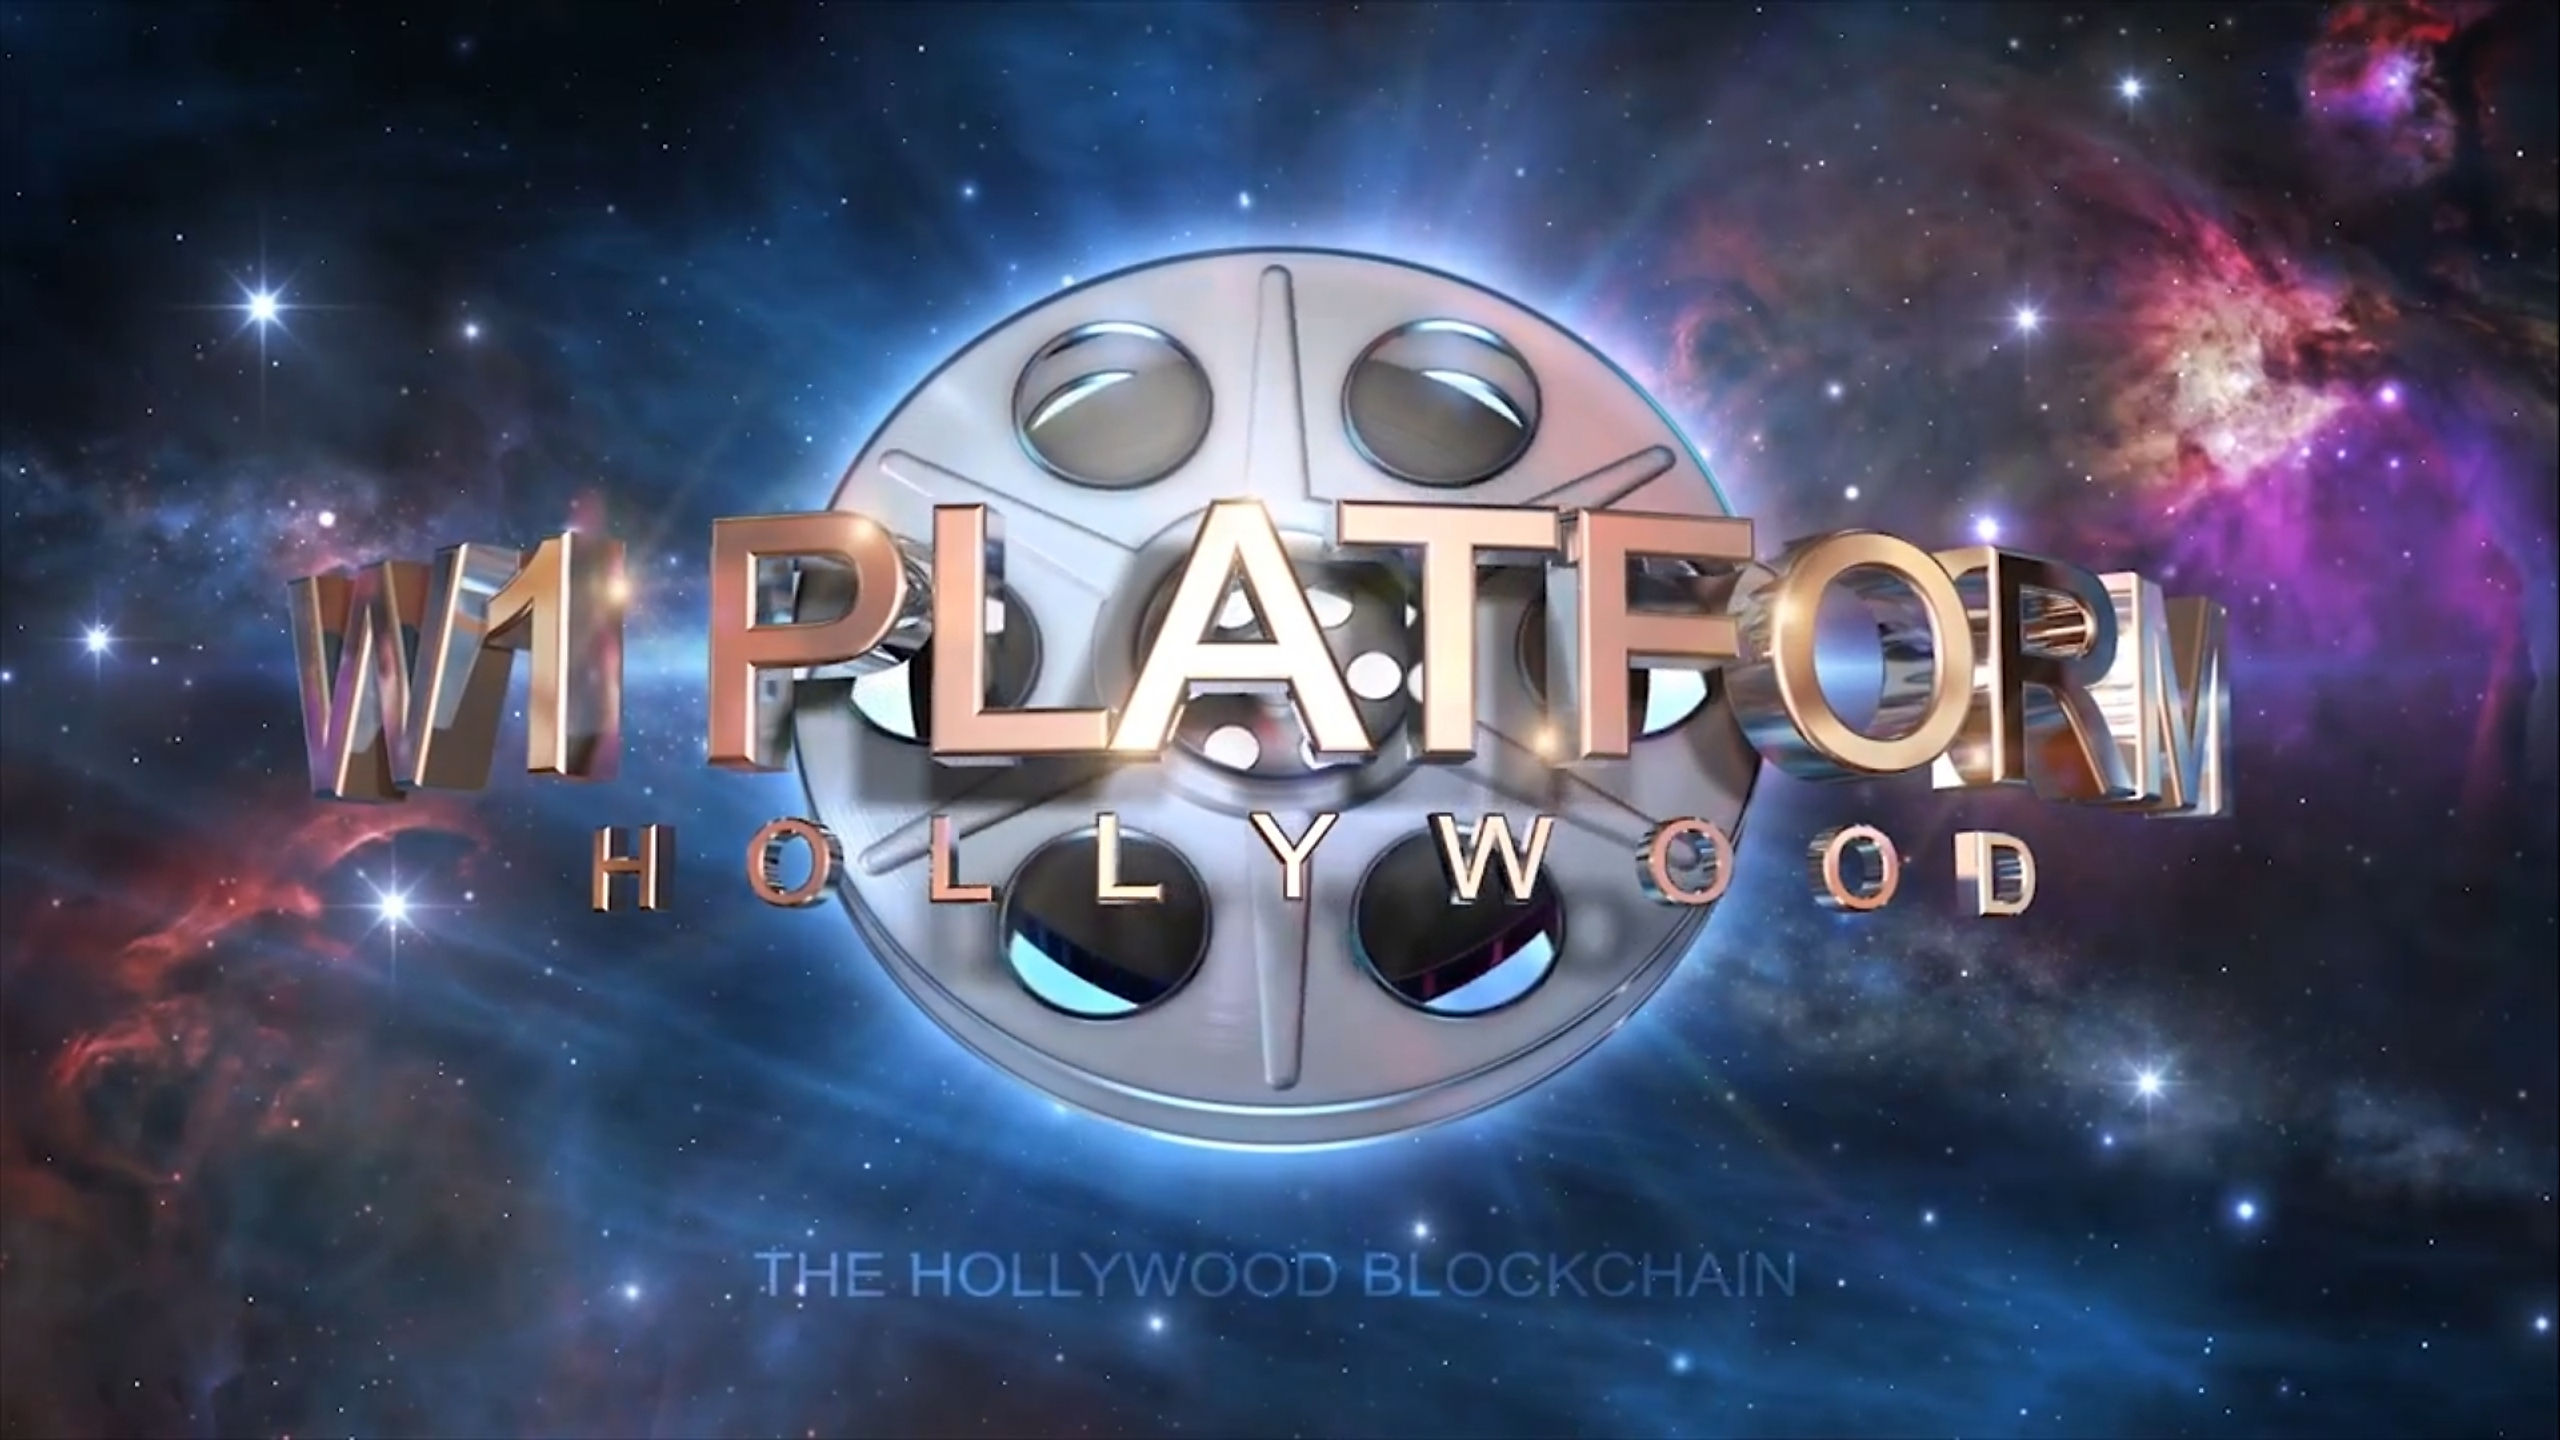 W1 Platform - The Hollywood Blockchain